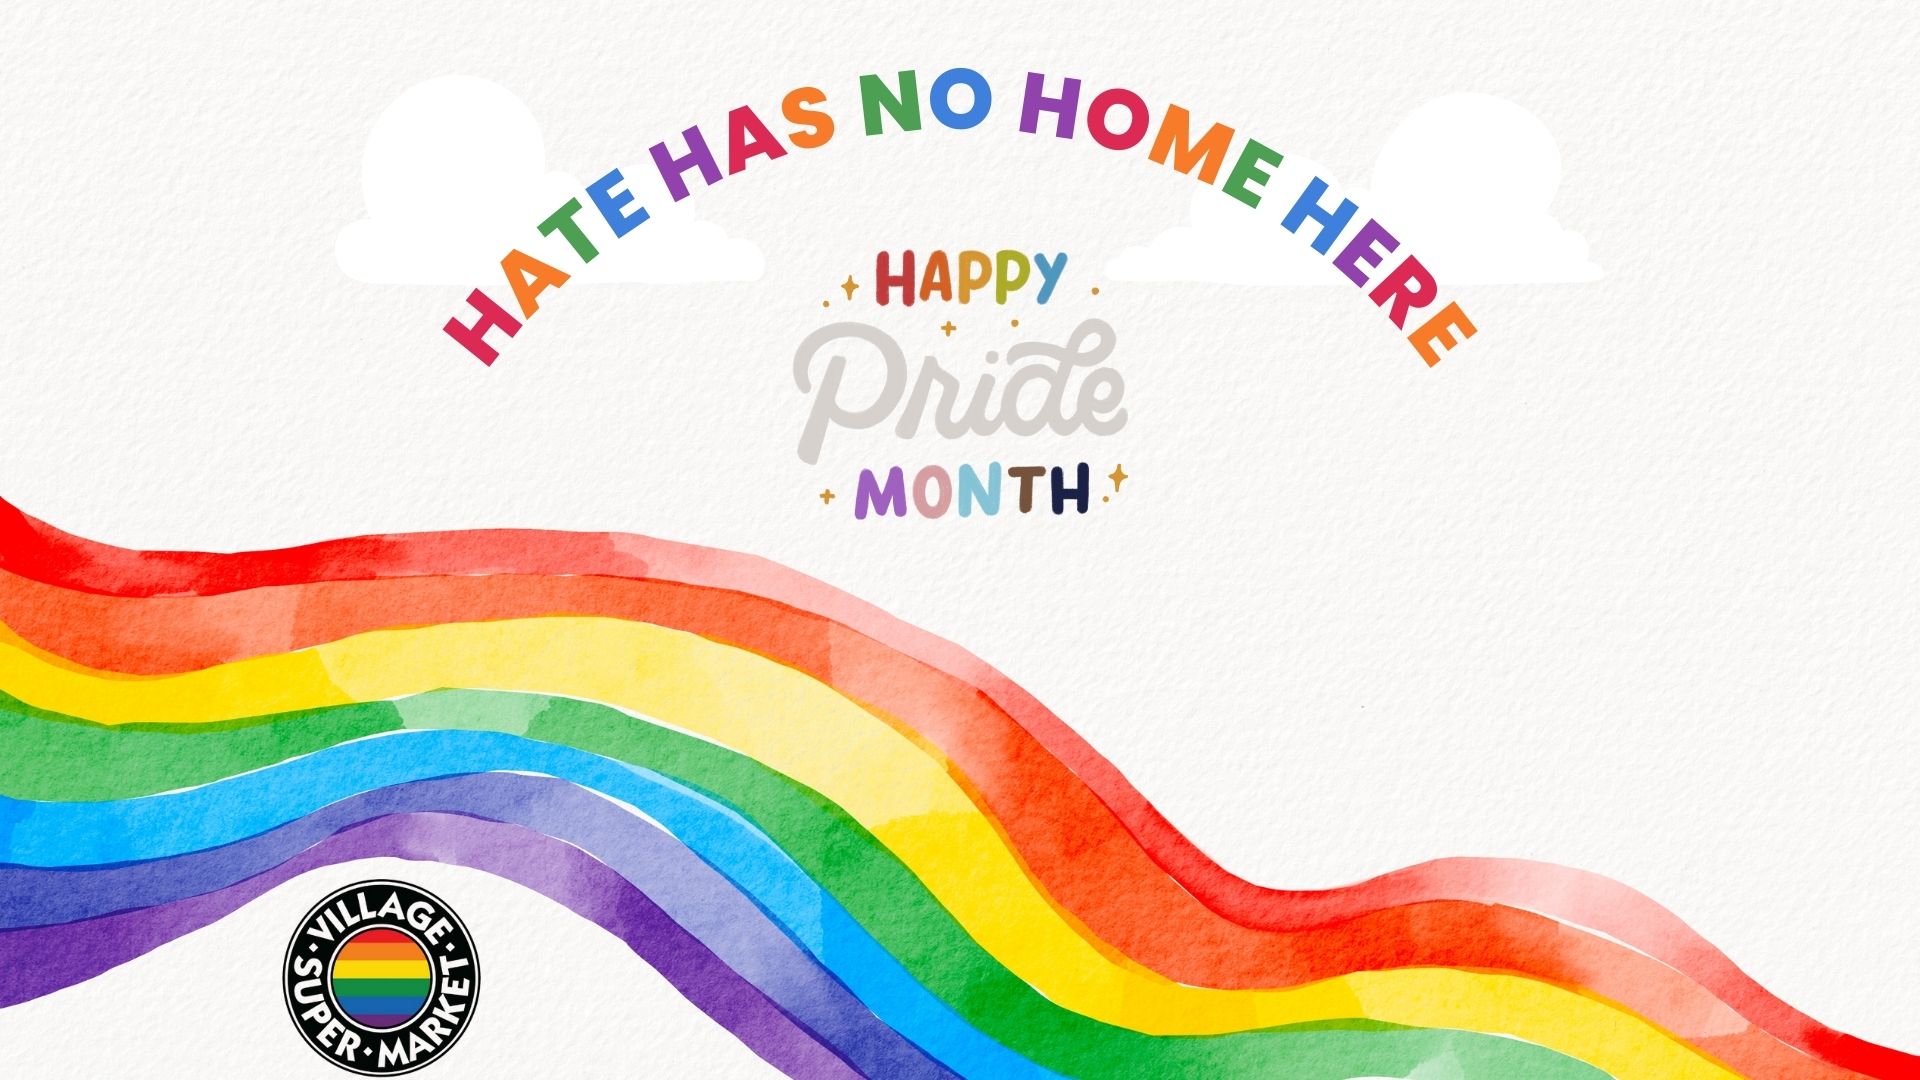 June is LGBTQ+ Pride Month!